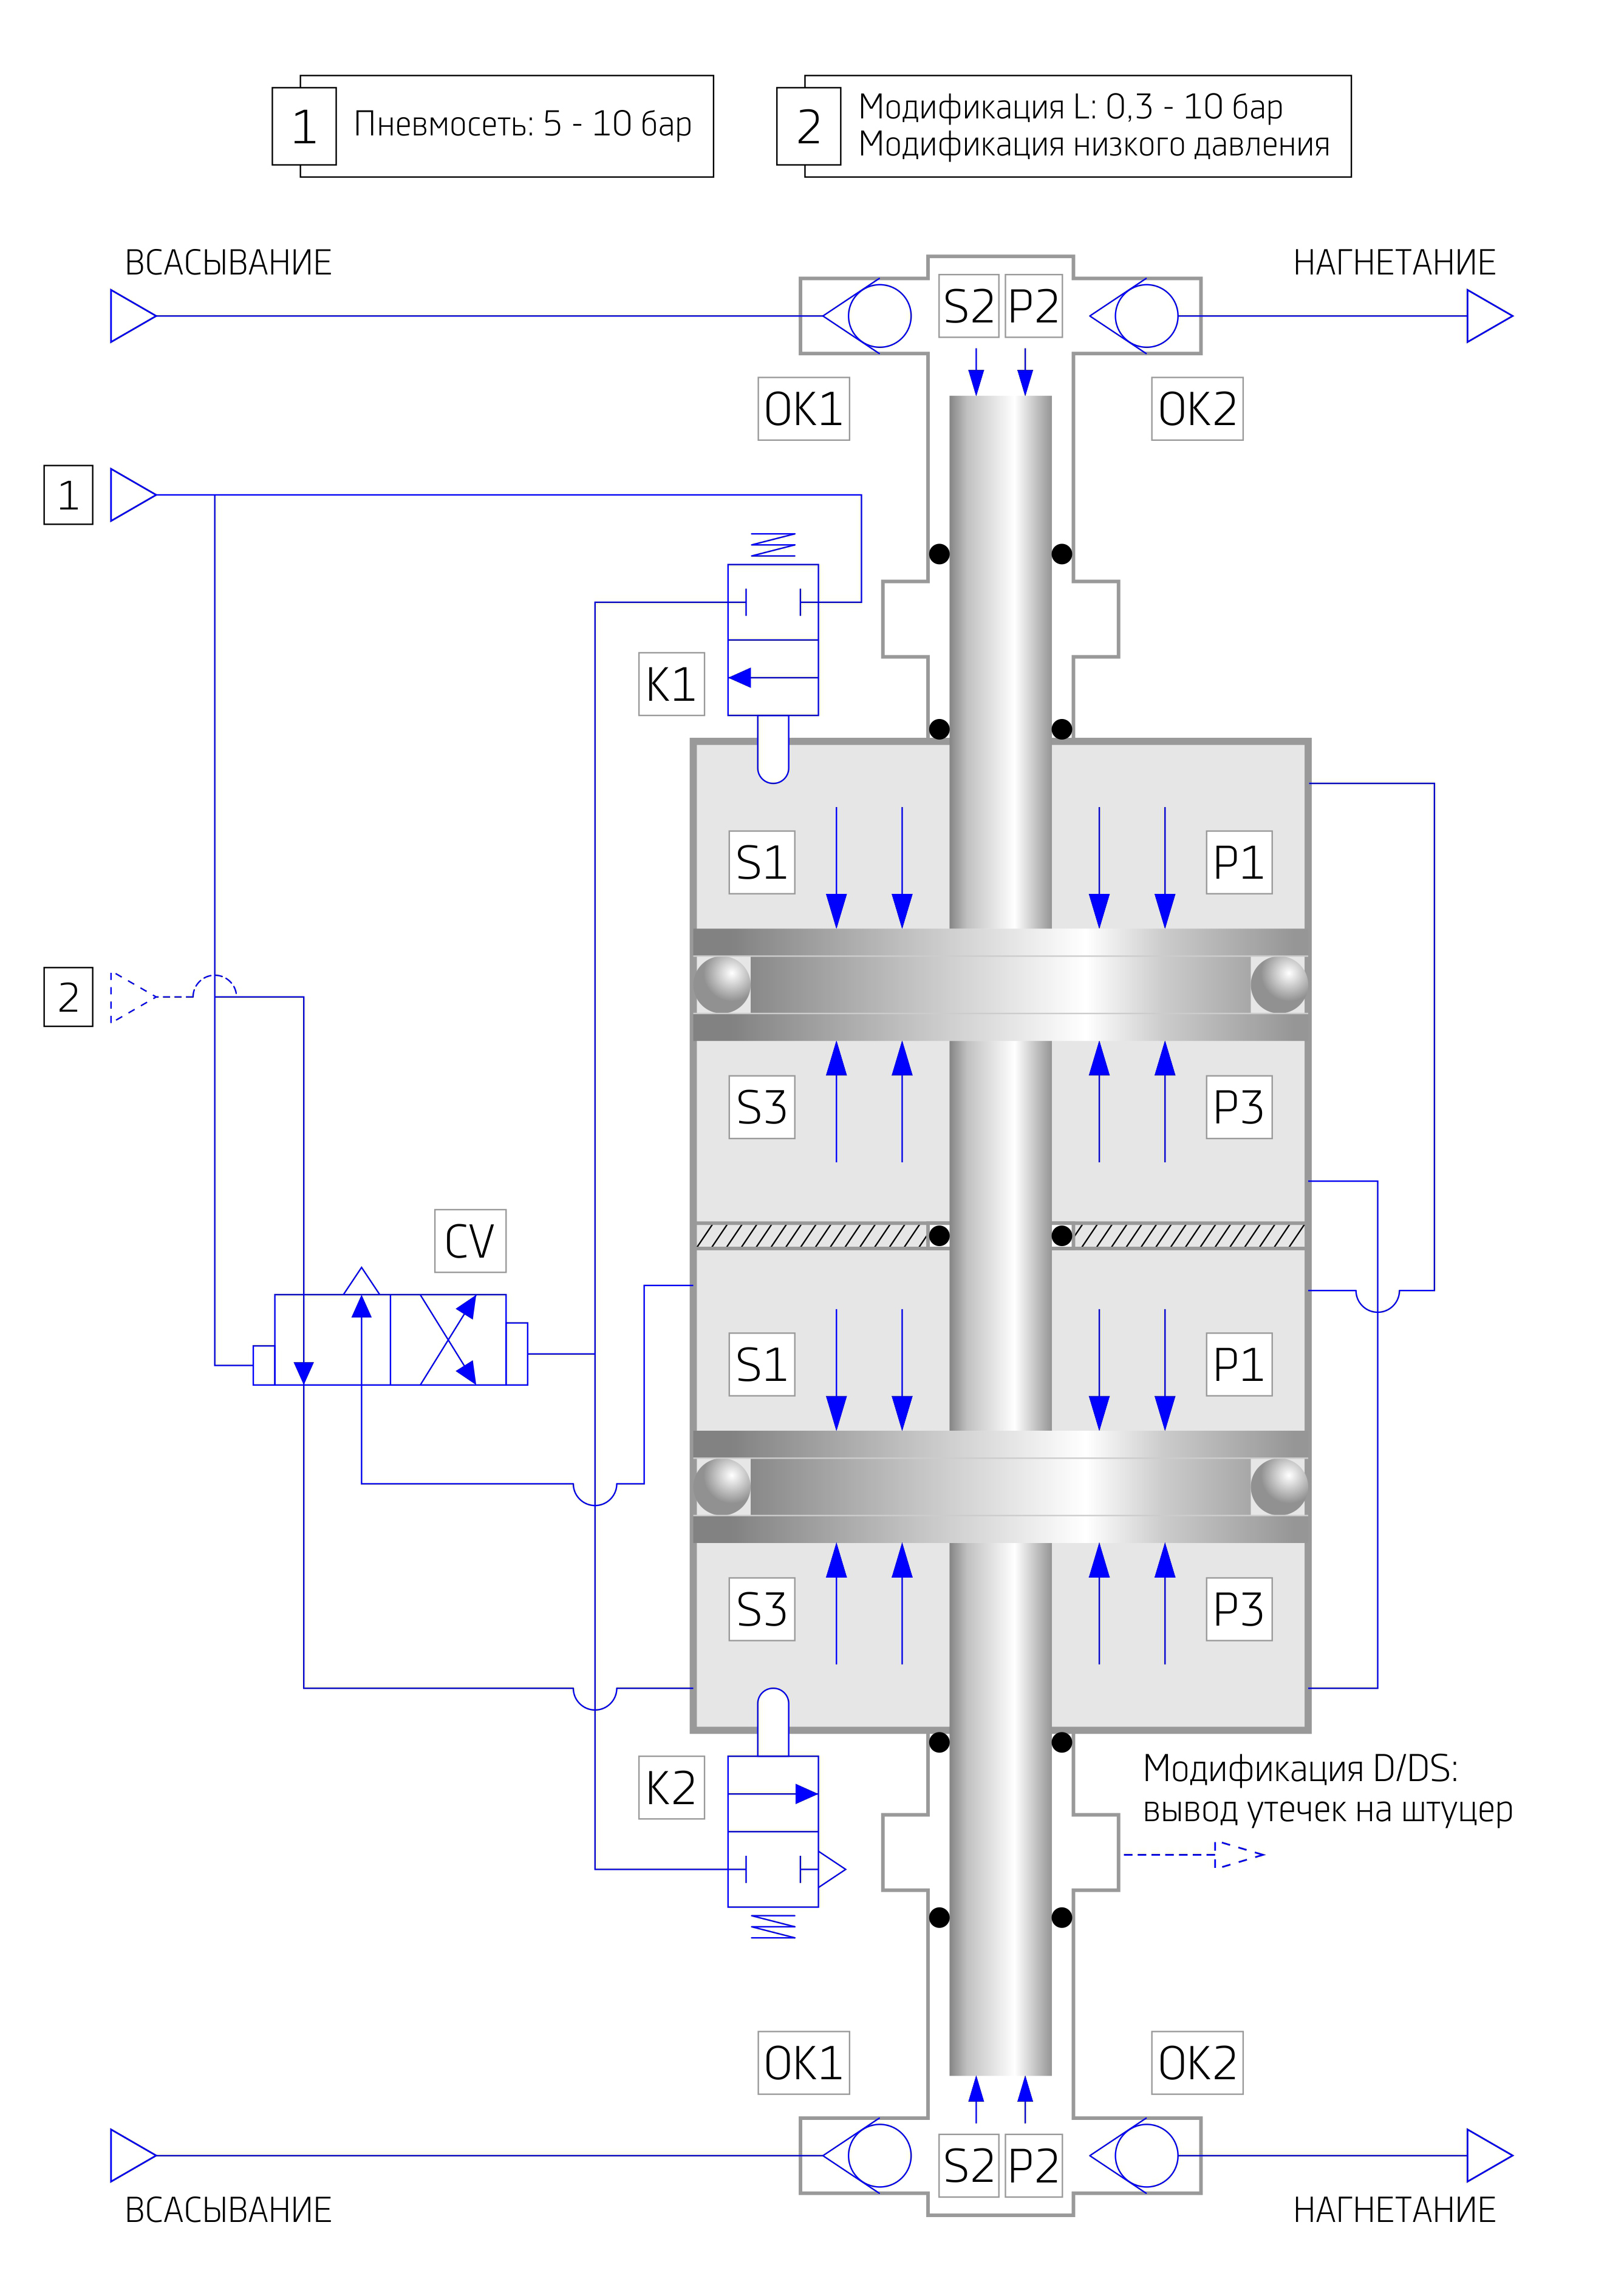 Pumps for Chromatography: High pressure liquid pumps for chromatography